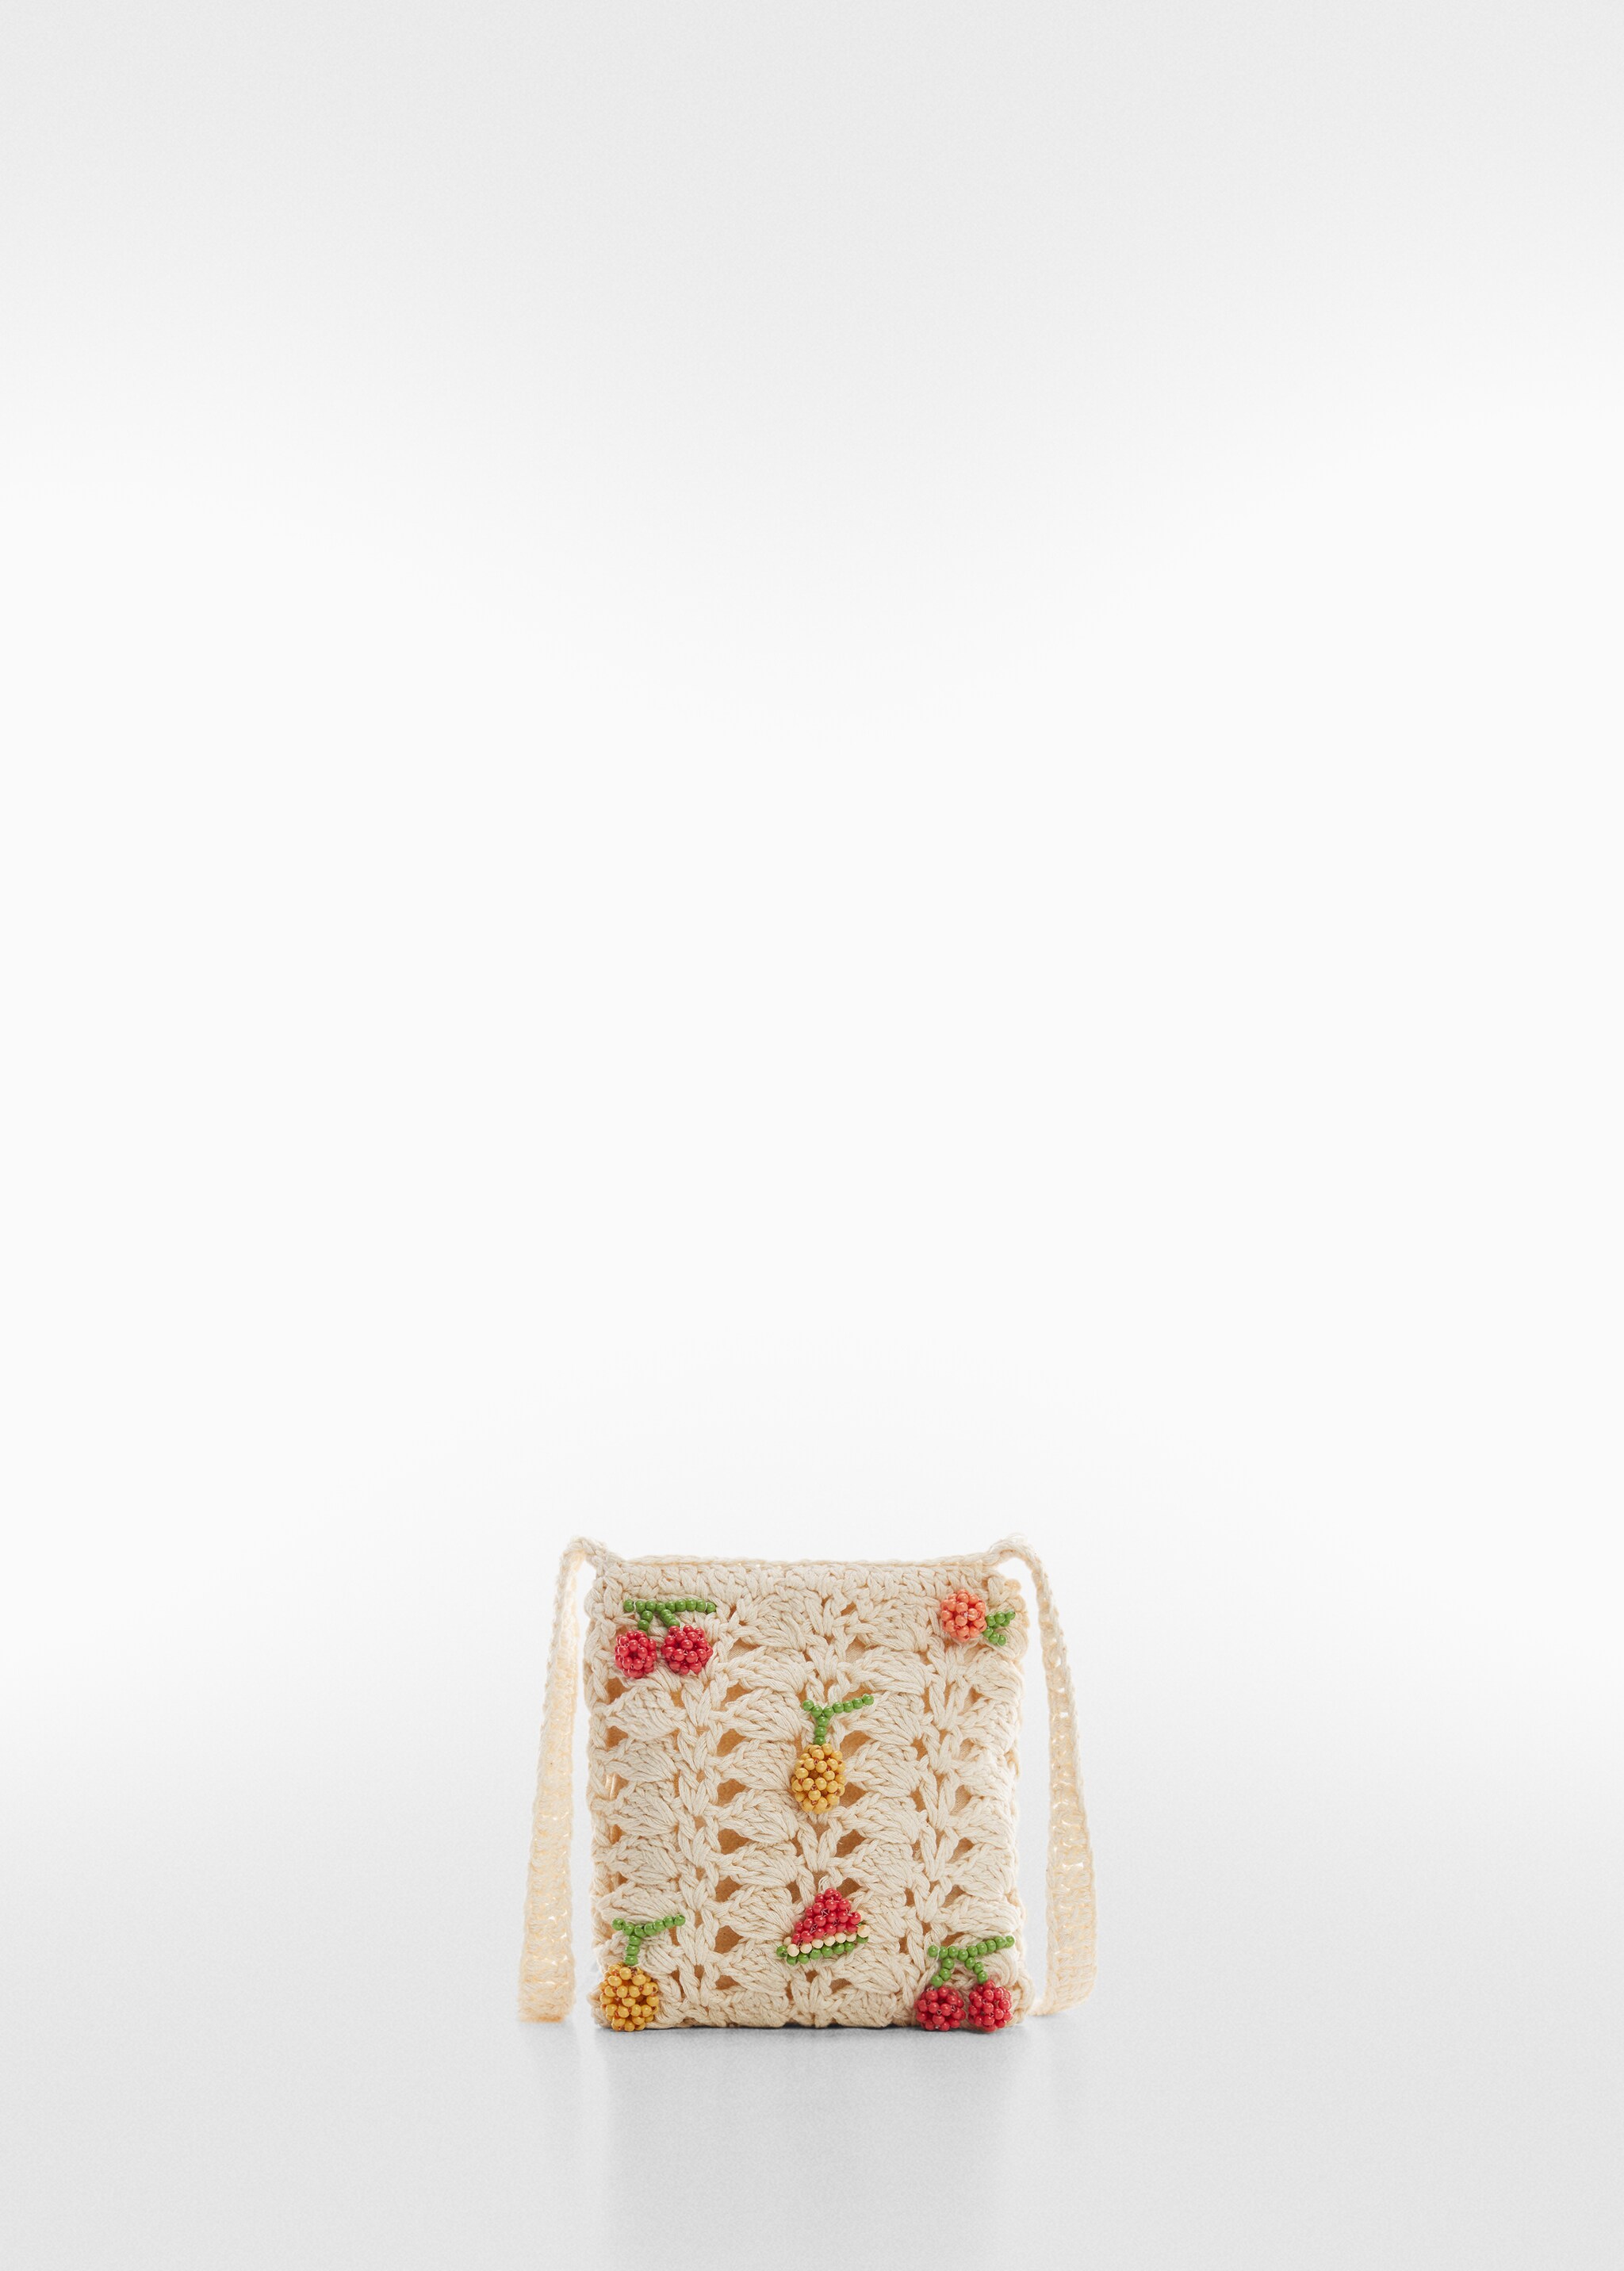 Mini bolso crochet  - Artículo sin modelo